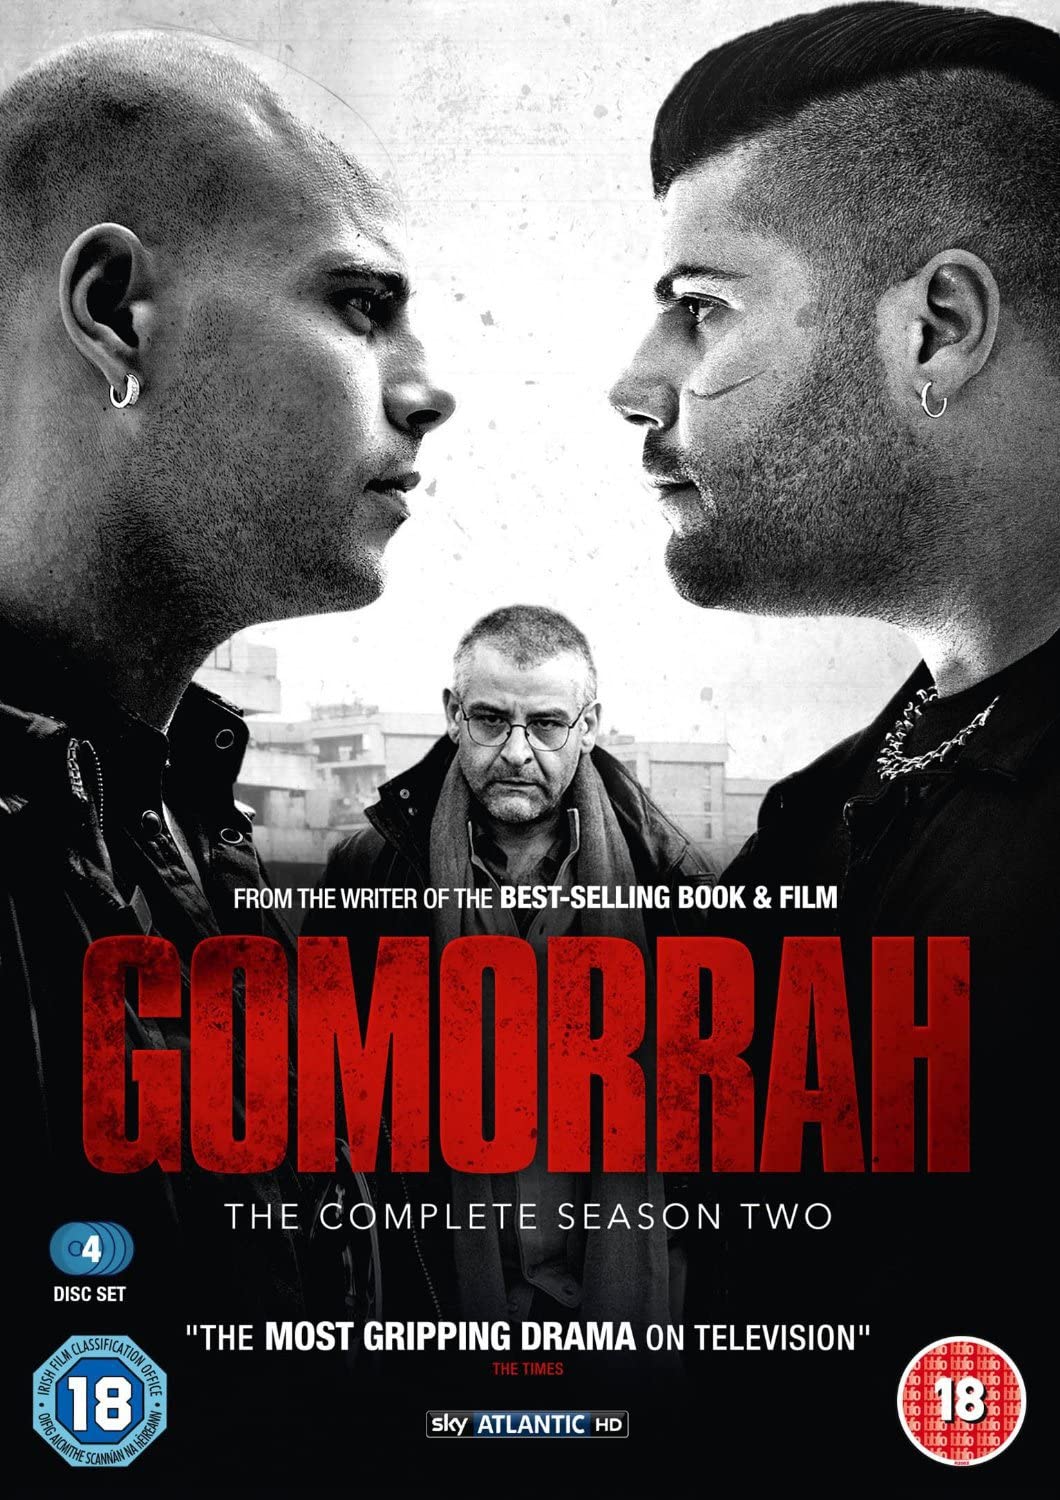 Gomorrah: The Complete Season Two - Drama [DVD]